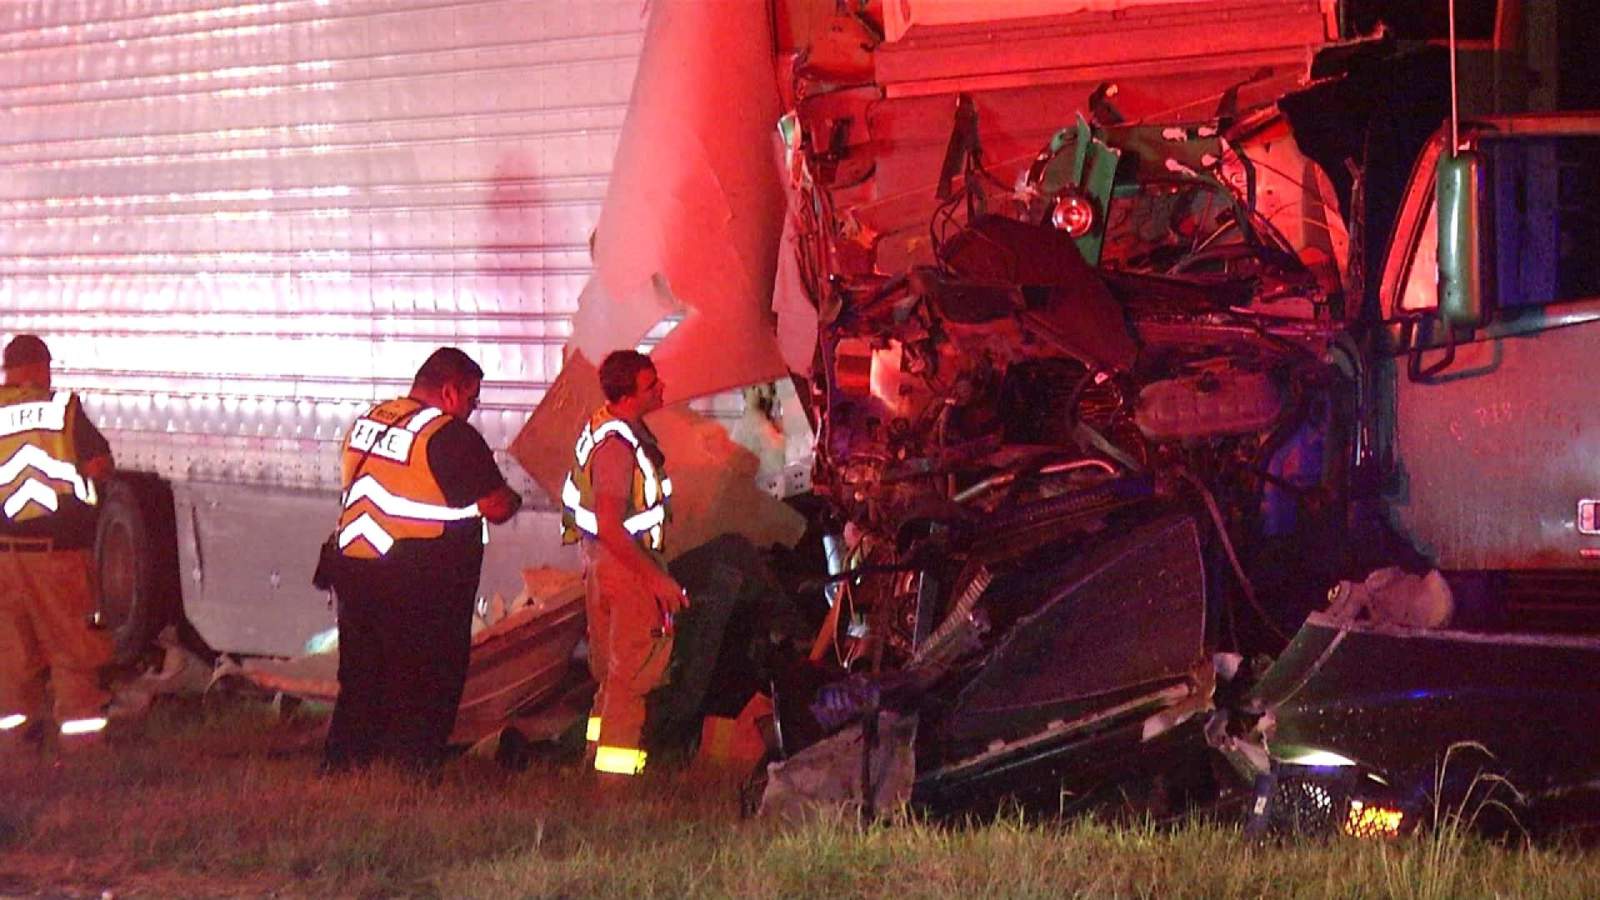 18-wheeler crash leaves debris, cabbage on I-37 in South Bexar County